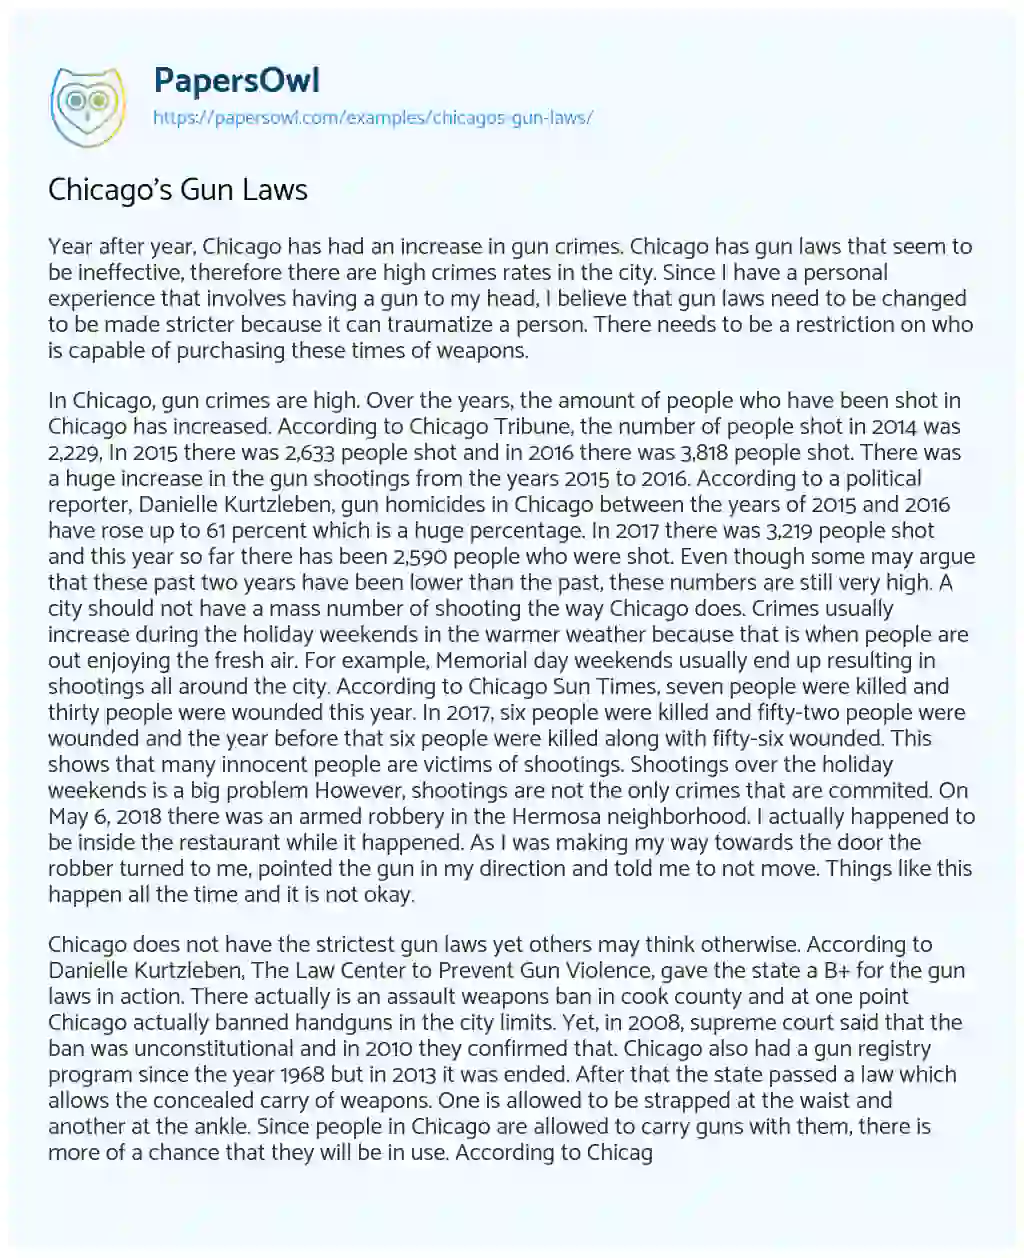 Essay on Chicago’s Gun Laws